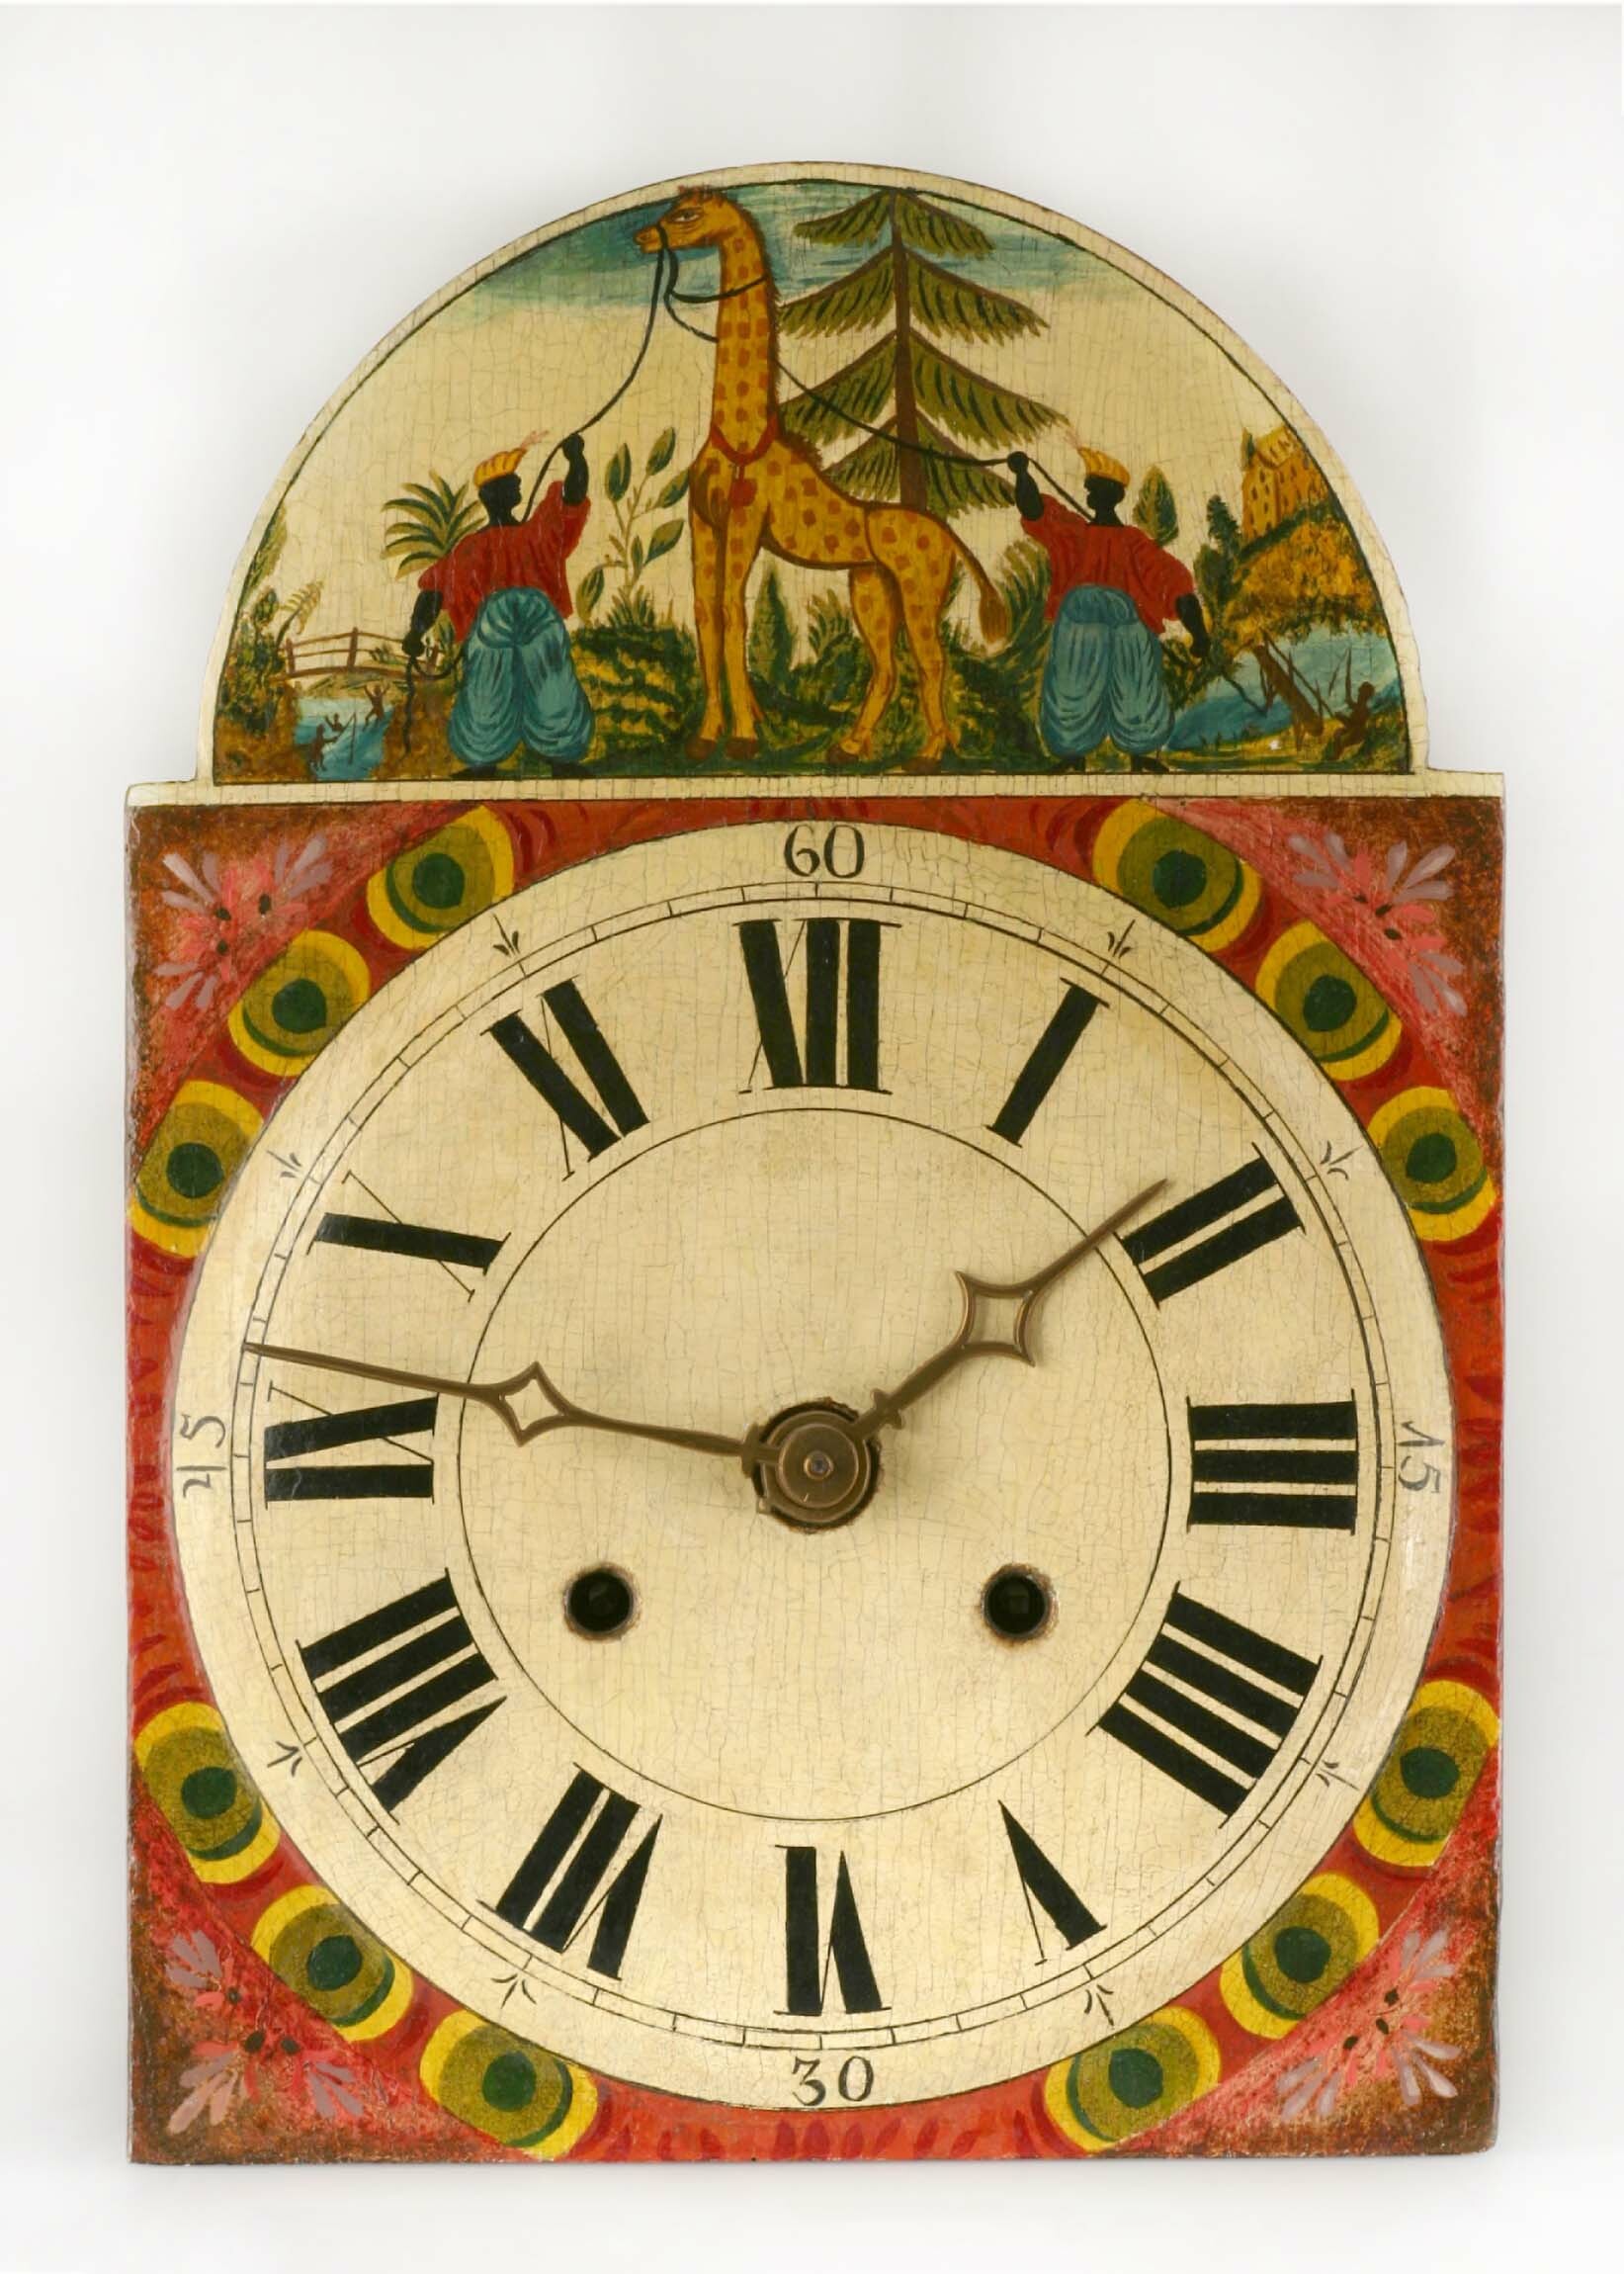 Lackschilduhr, Paul Fehrenbach, Gütenbach, um 1830 (Deutsches Uhrenmuseum CC BY-SA)